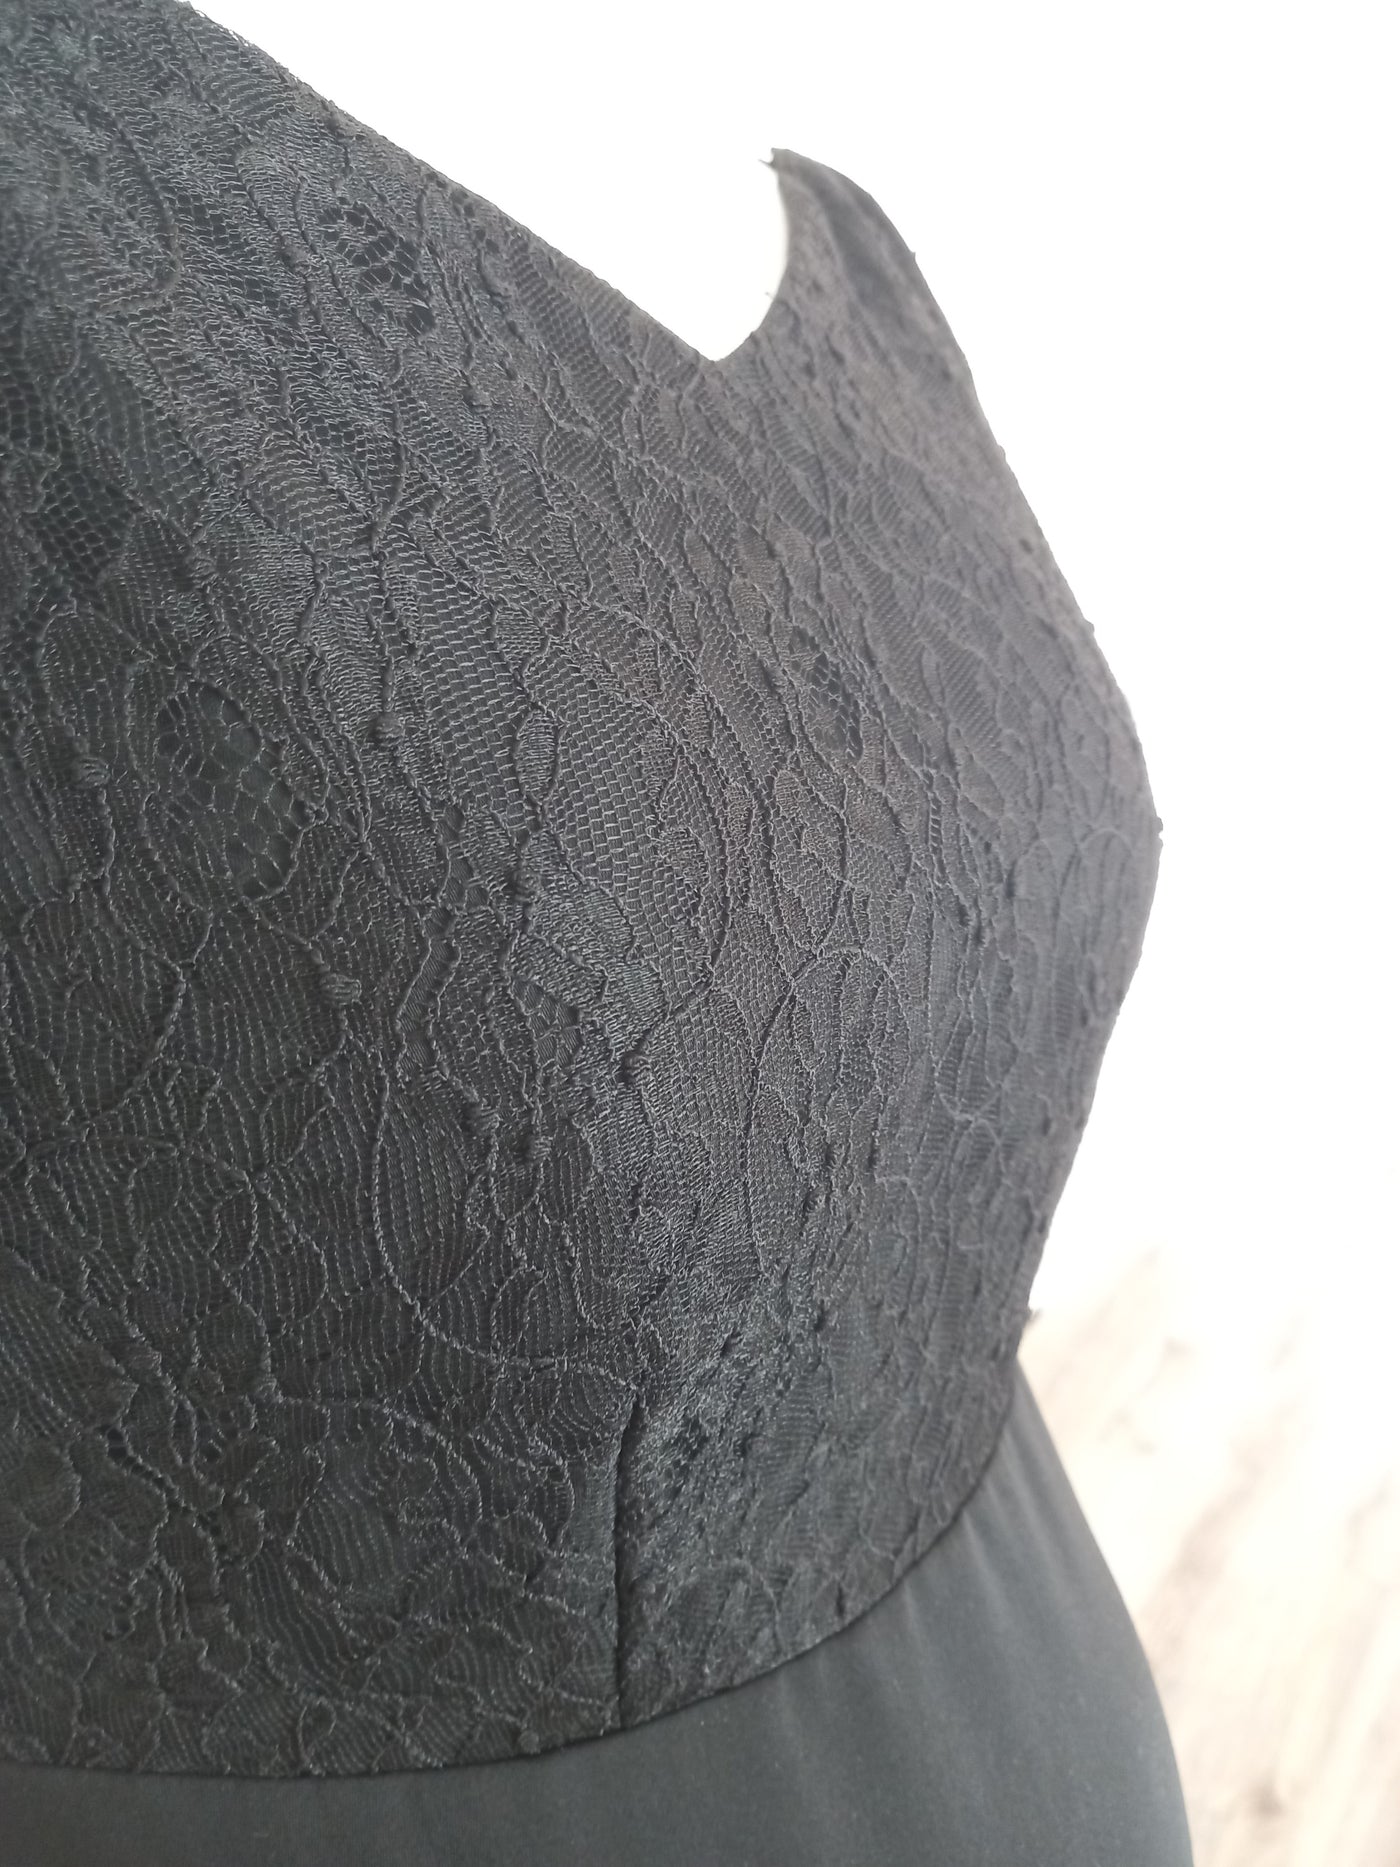 Tiffany Rose Black Lace Bodice & Sleeves Dress - Size 1 (Approx UK 8/10)